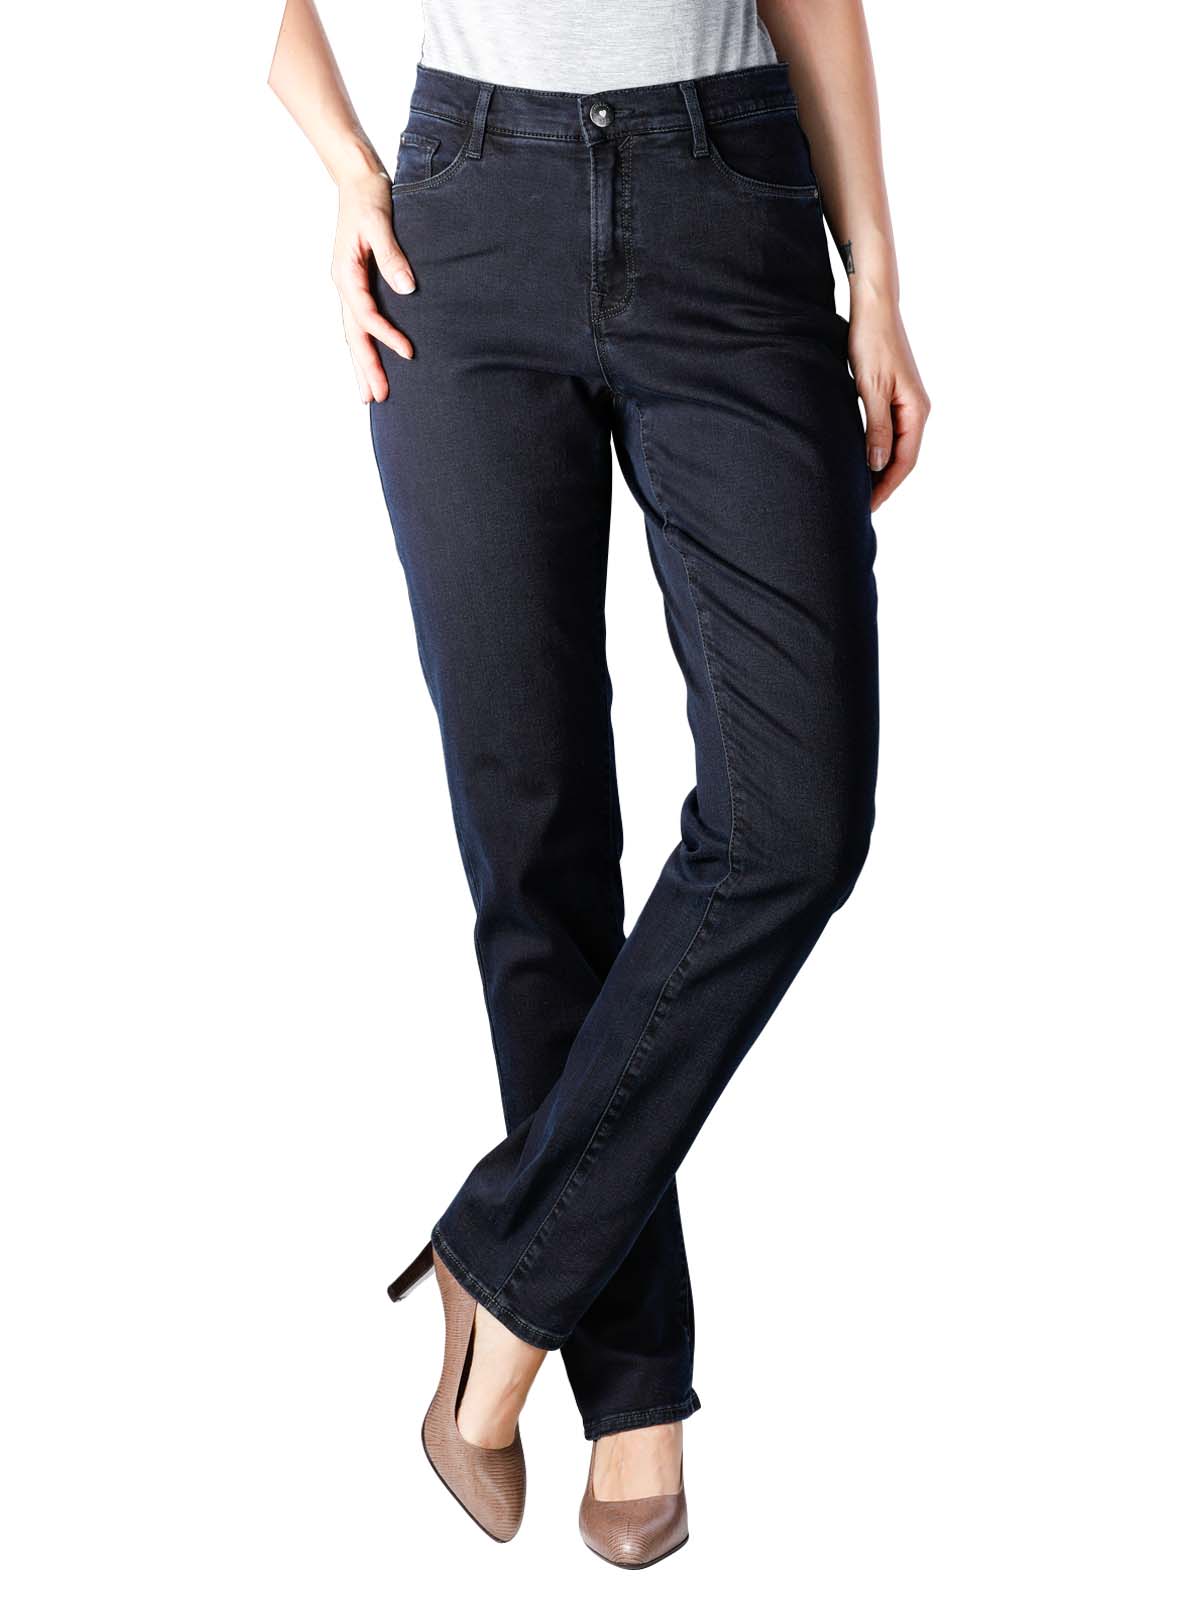 Carola Jeans dark blue Brax Women's Jeans | Free on BEBASIC.CH SIMPLY LOOK GOOD